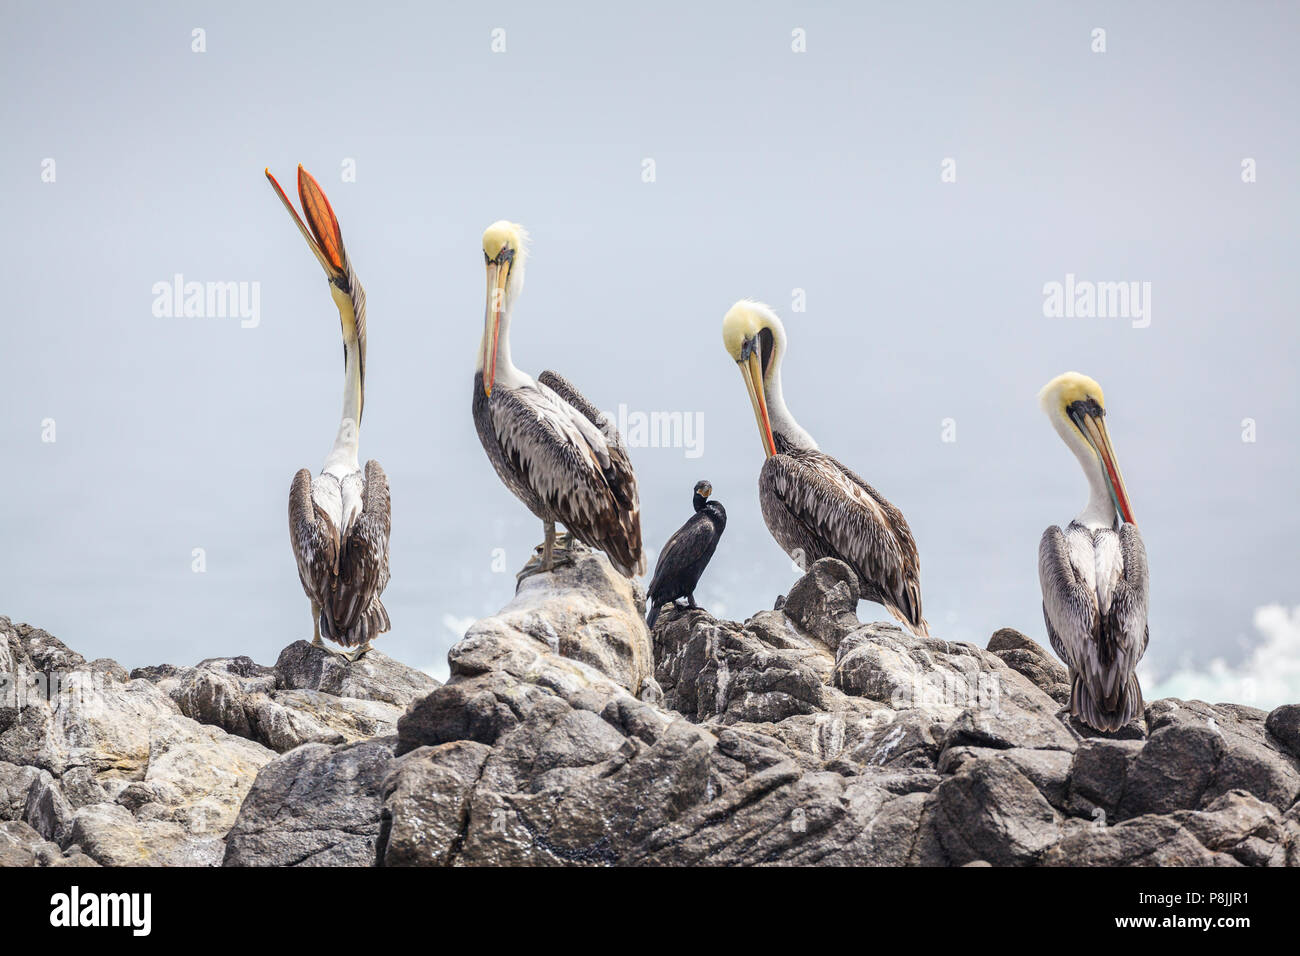 Group of four Peruvian Pelicans (Pelecanus thagus) and one Neotropic Cormorant (Phalacrocorax brasilianus) on a rock Stock Photo